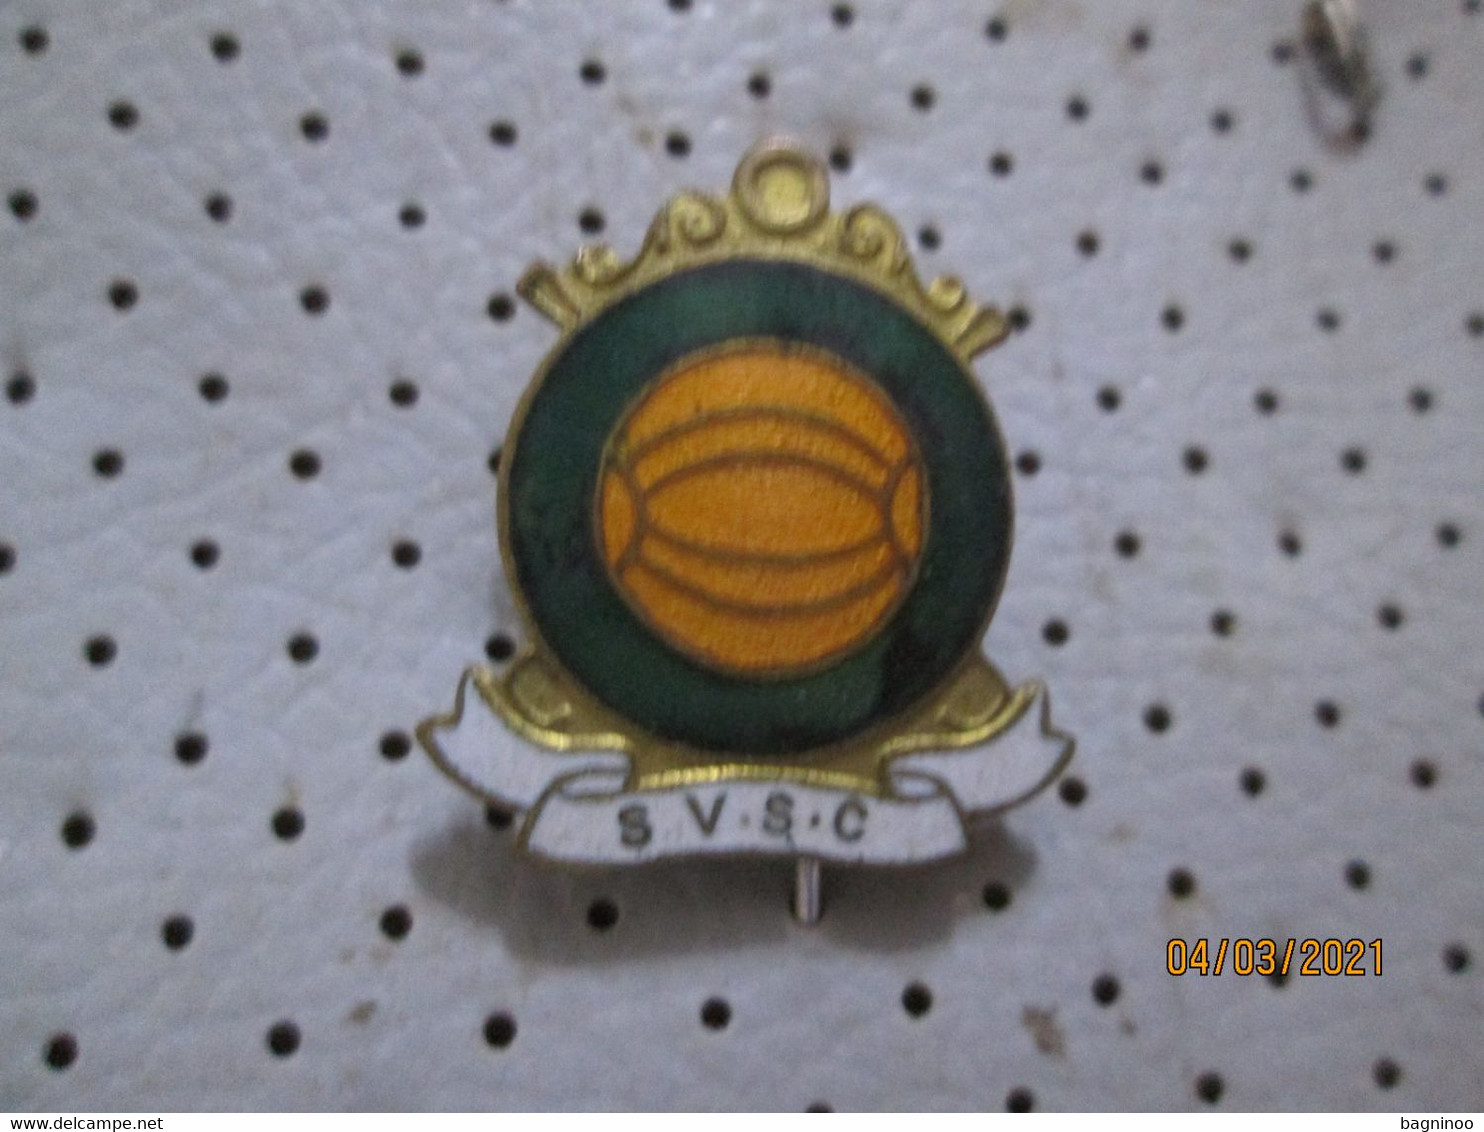 Basketball S.V.S.C. Buttonhole Badge - Basketball